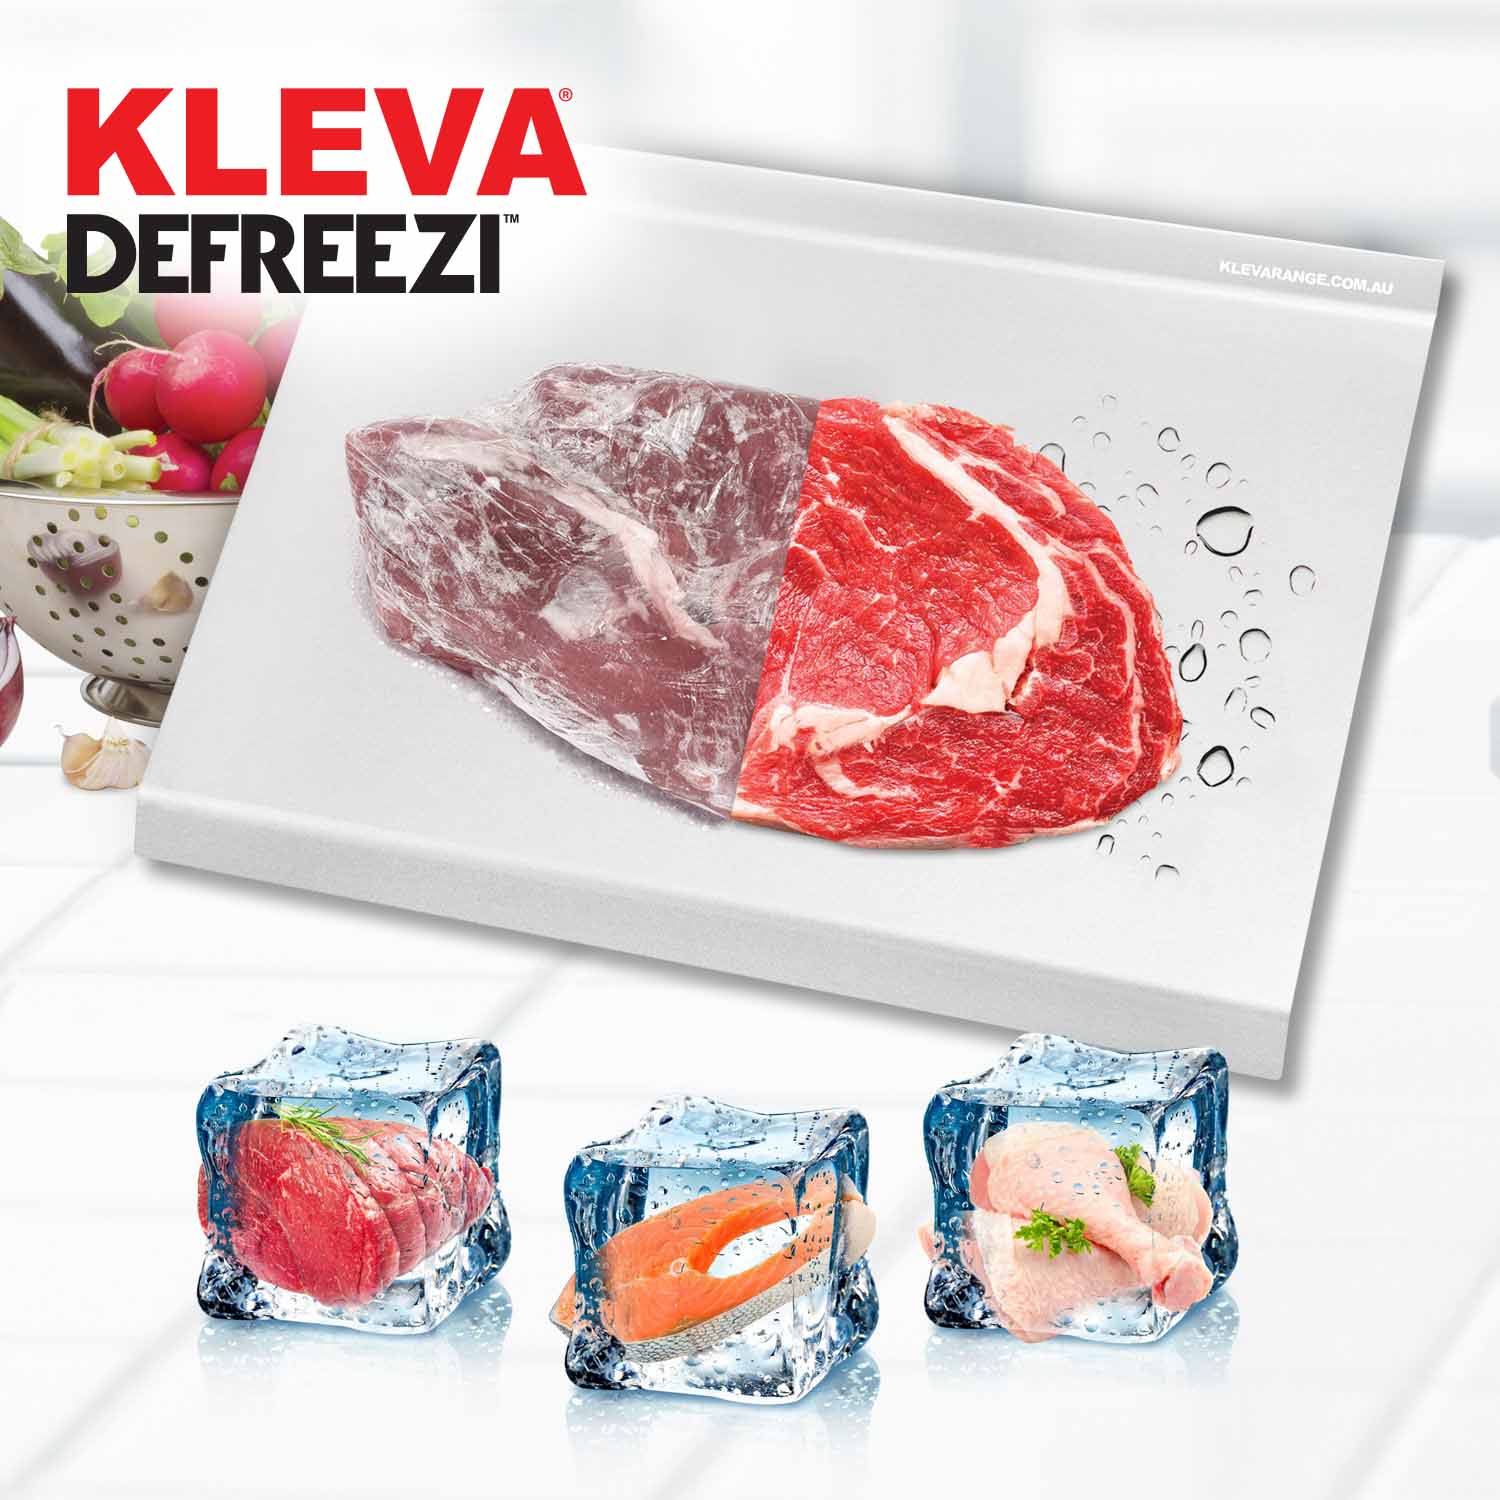 Defreezi® Defrosting Tray De-Thaw Meat + Frozen Food Up To 5x Faster! Defrost Kleva Range   